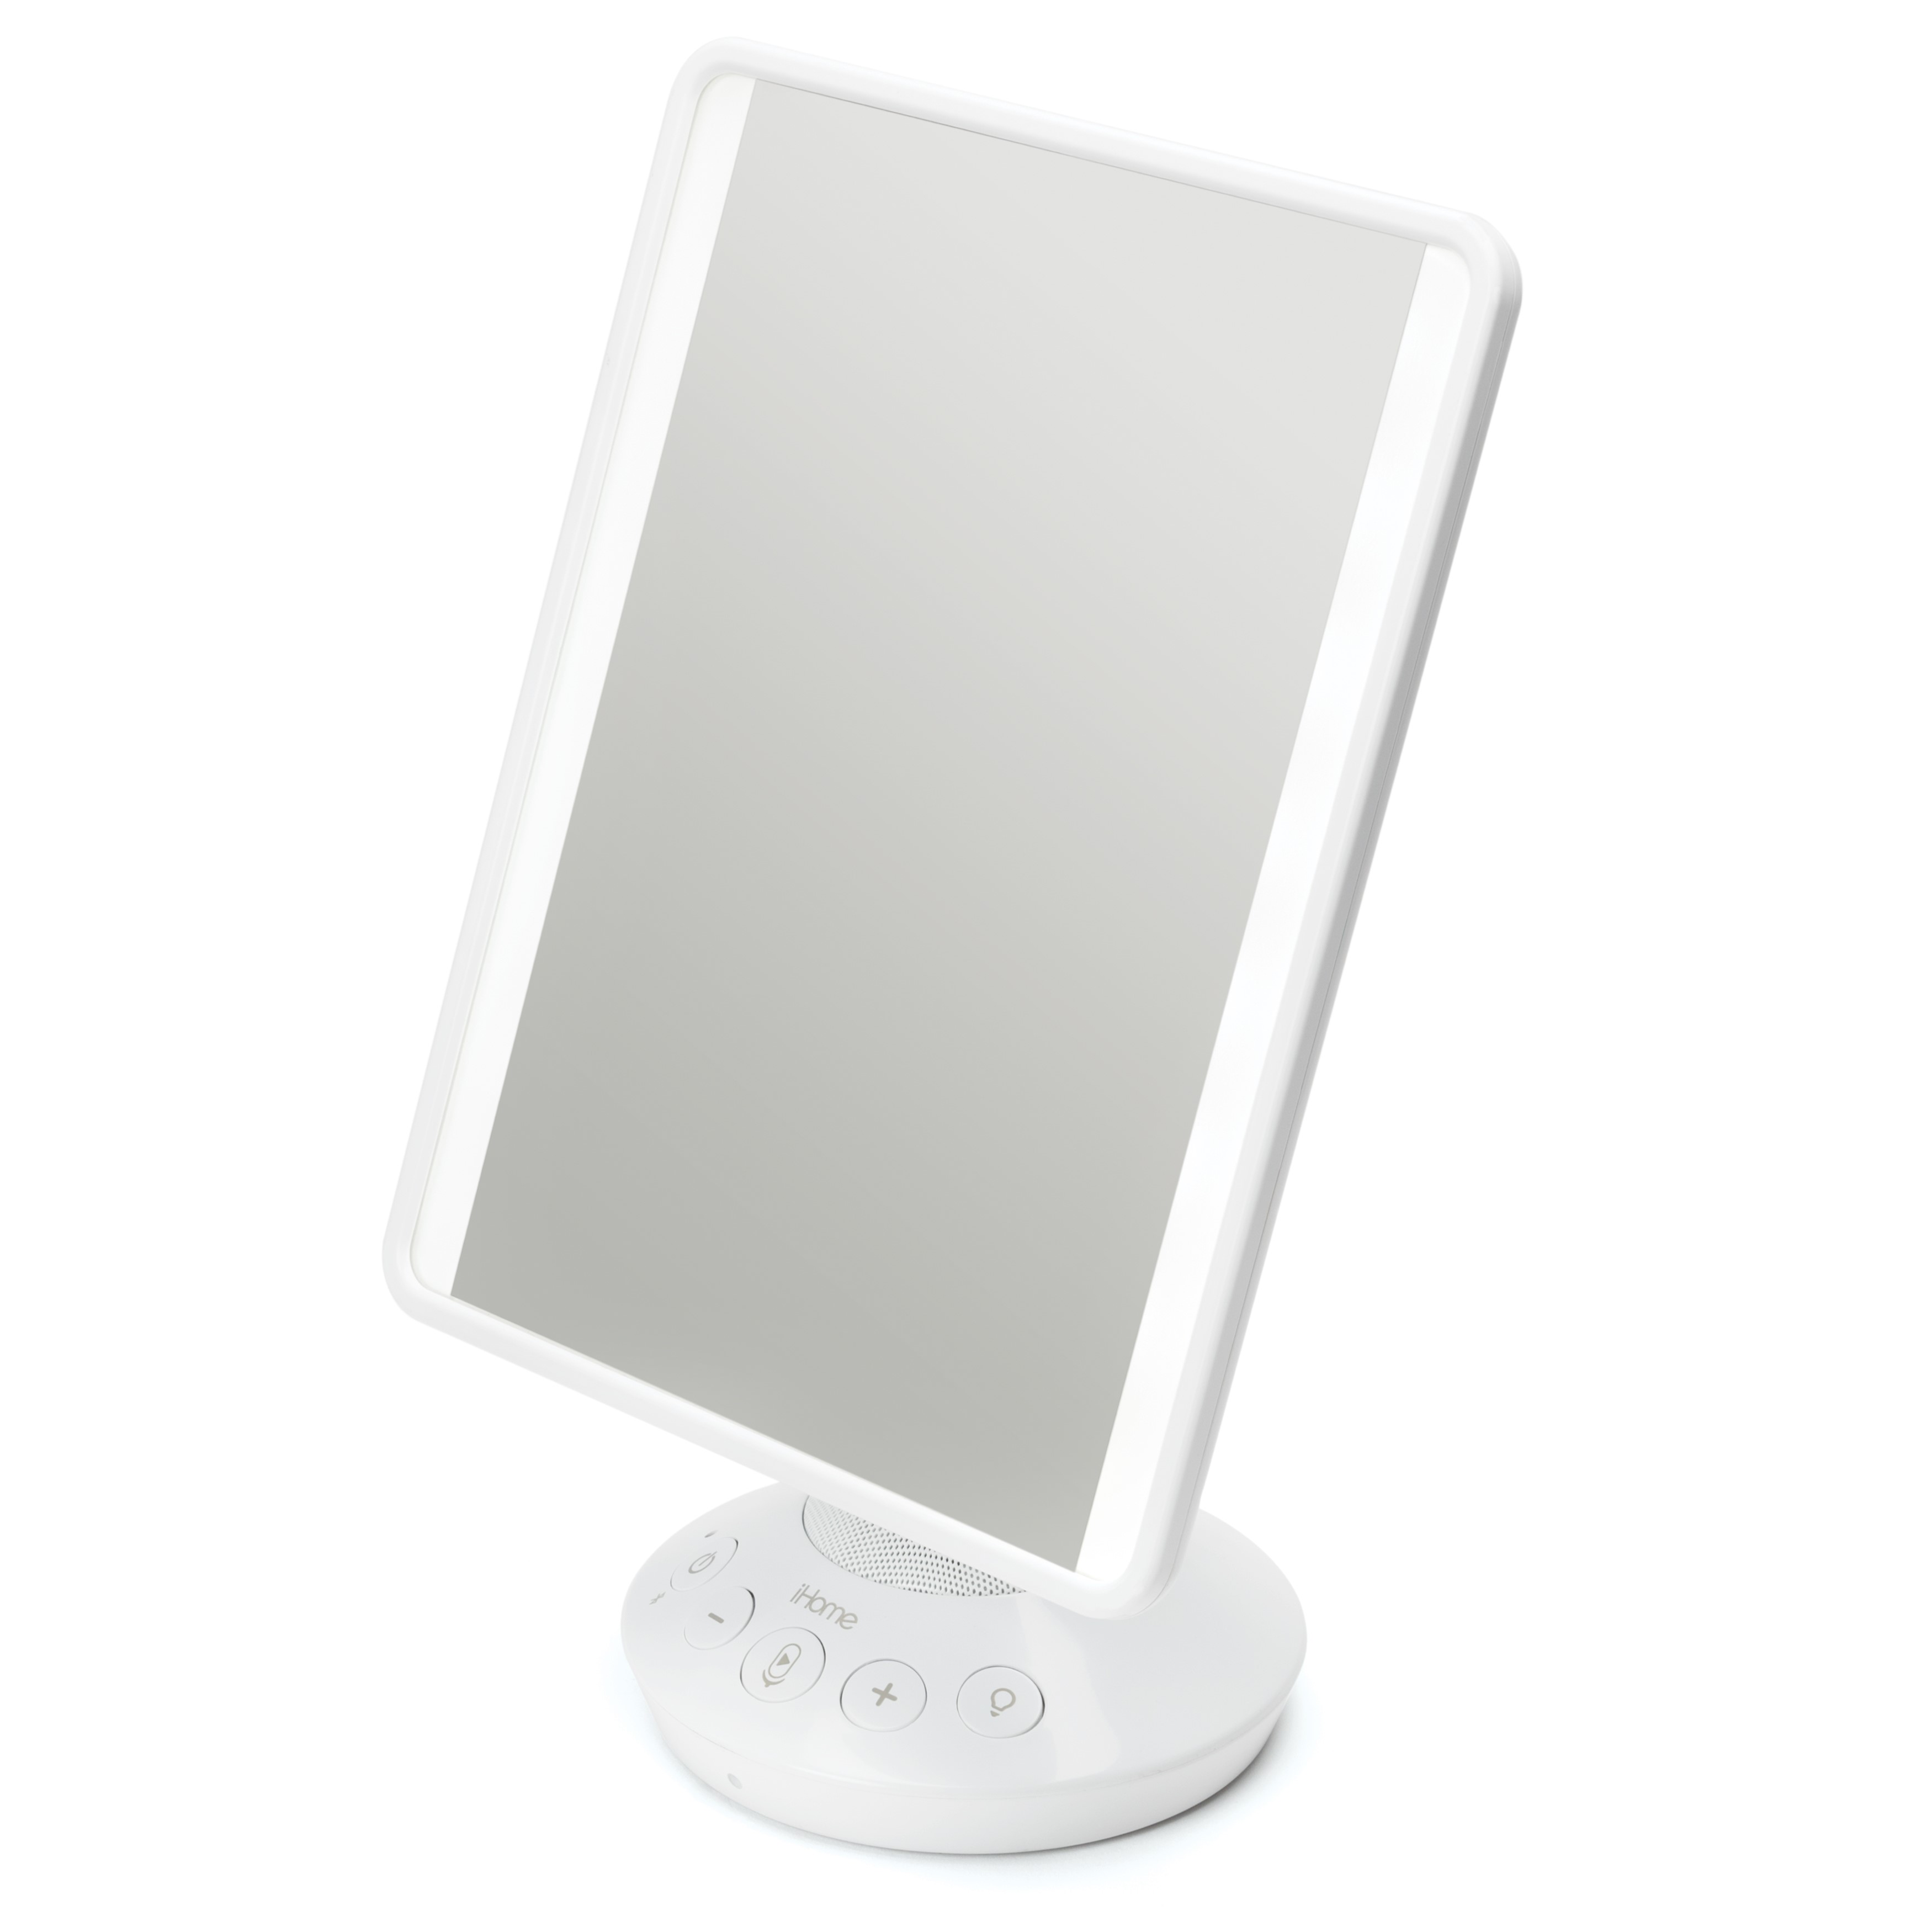 iHome Mirror with Bluetooth Audio, LED Lighting, Bonus 10x Magnification, USB Charging, 7" x 9" - image 7 of 12